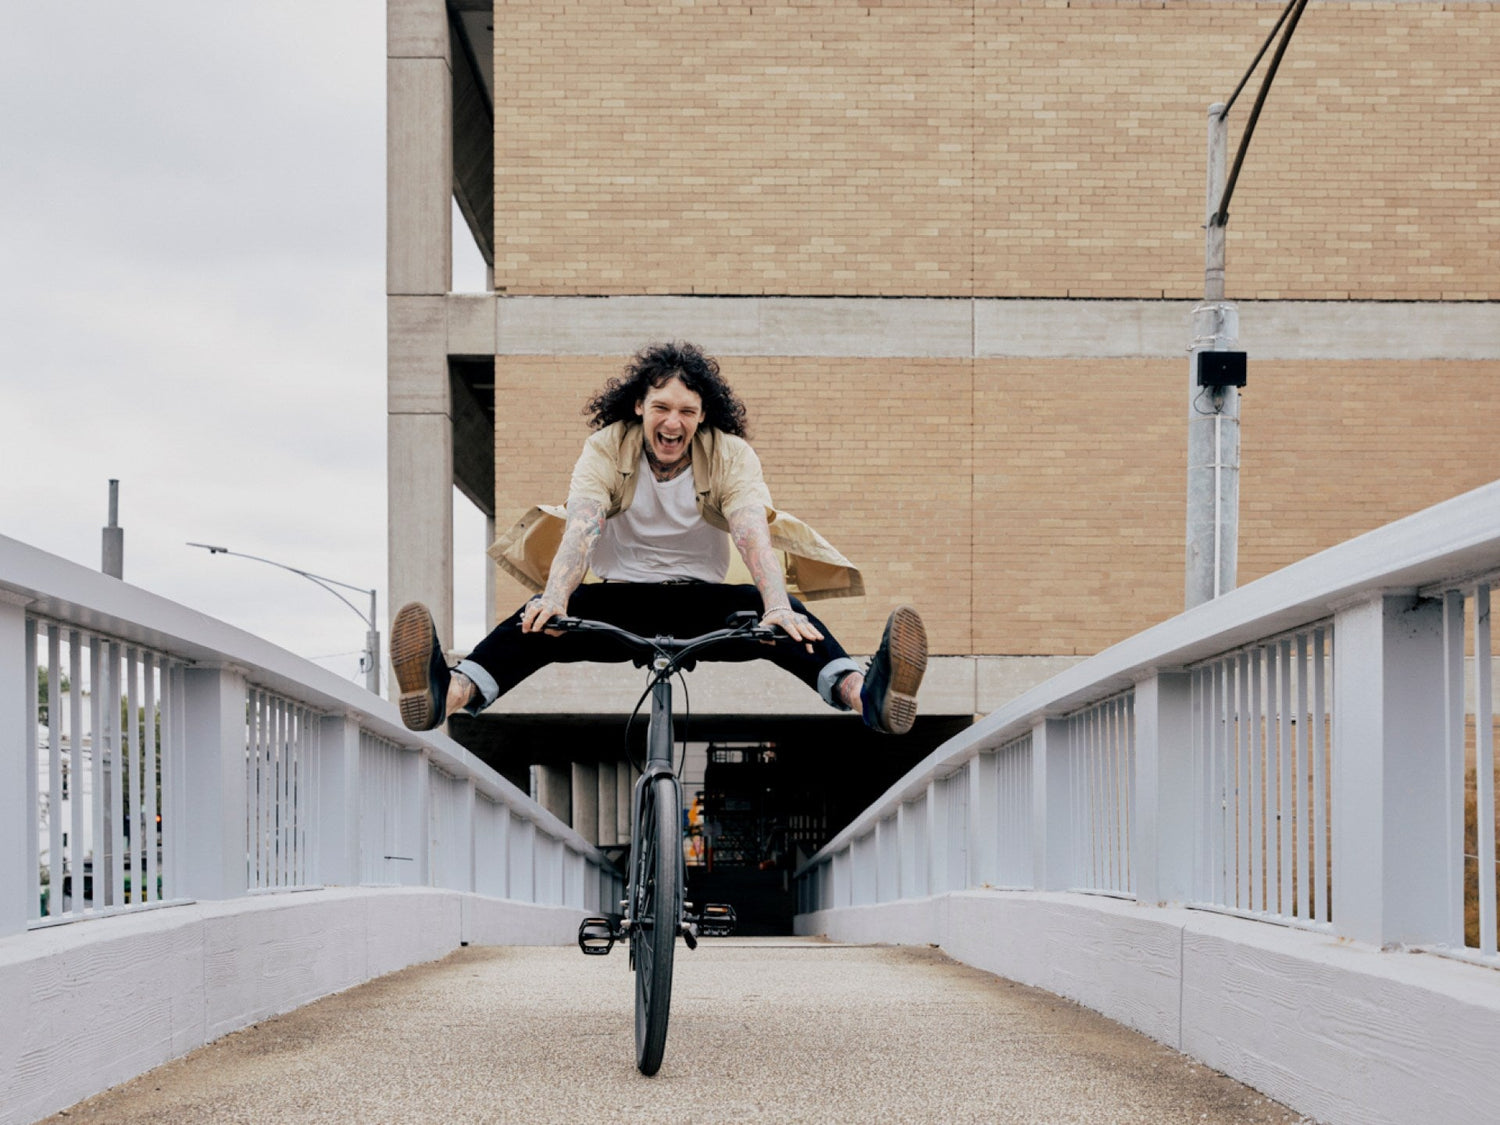 Man doing tricks on Amsterdam plus electric bike